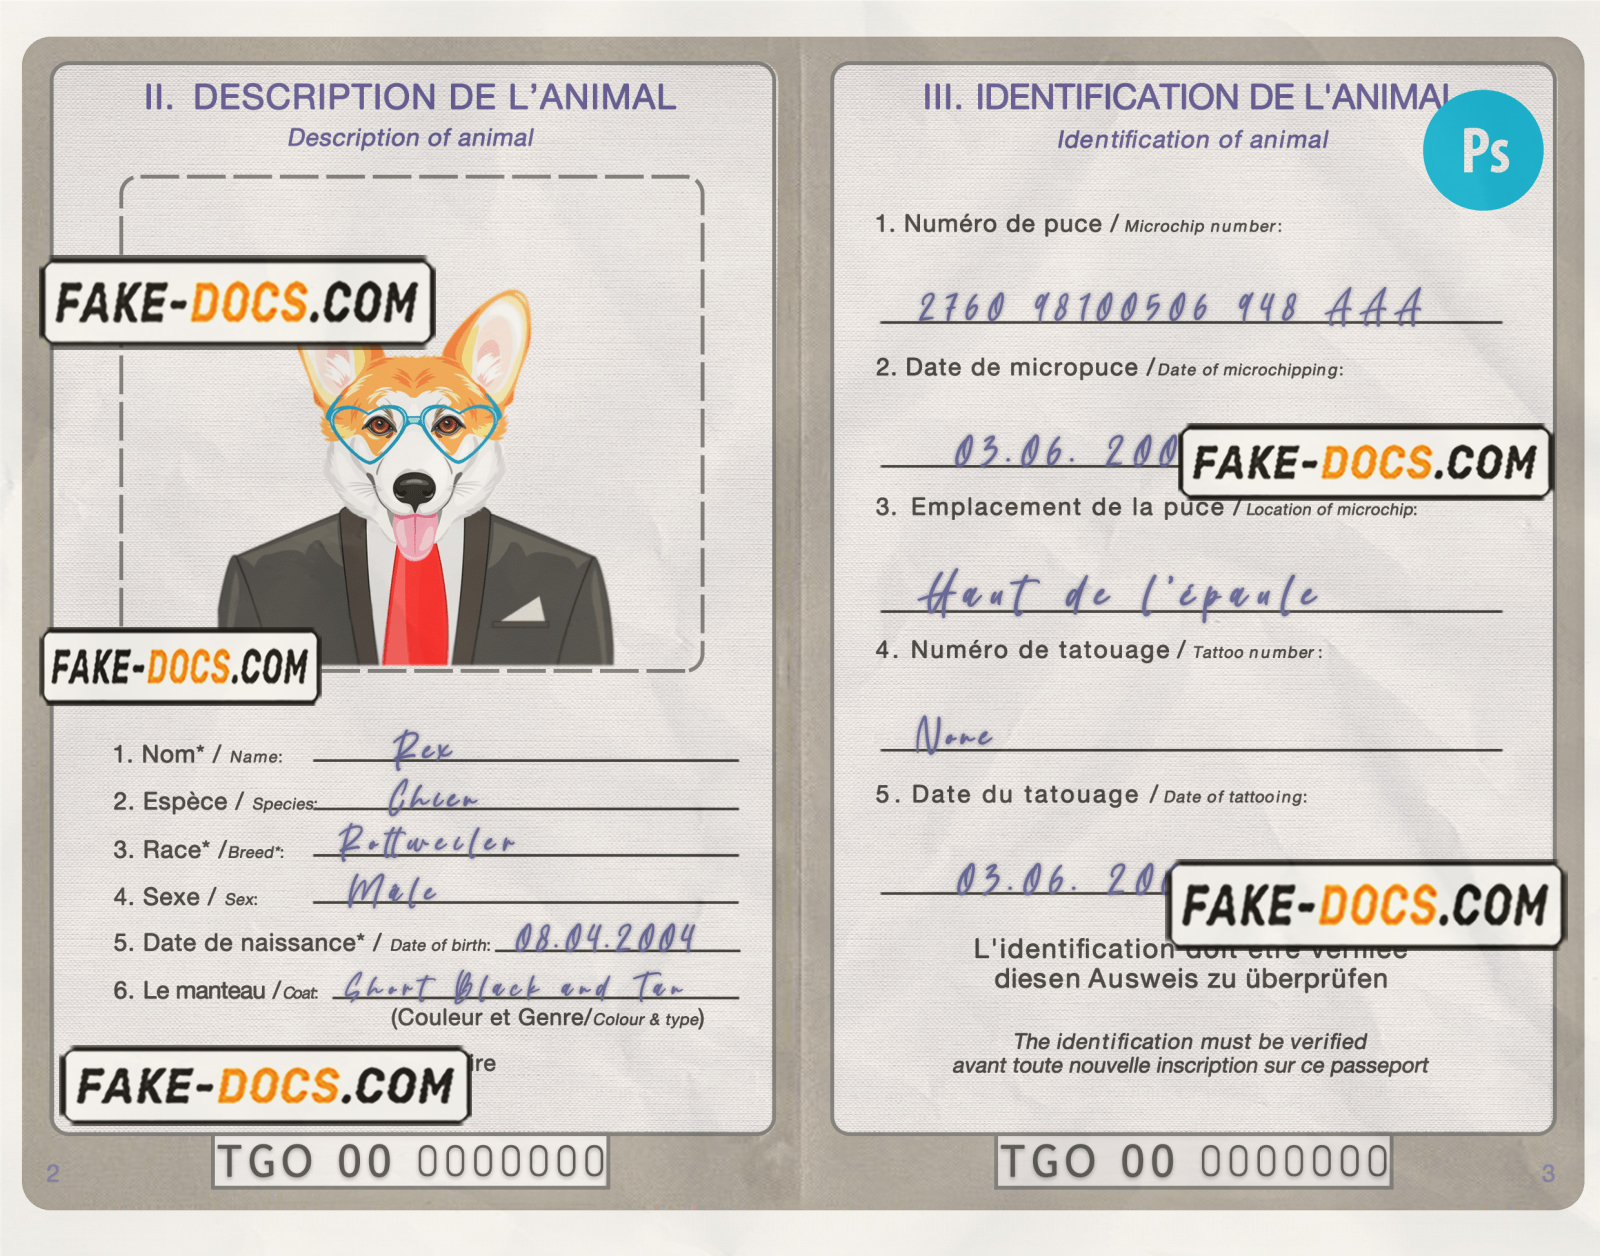 Togo dog (animal, pet) passport PSD template, completely editable scan